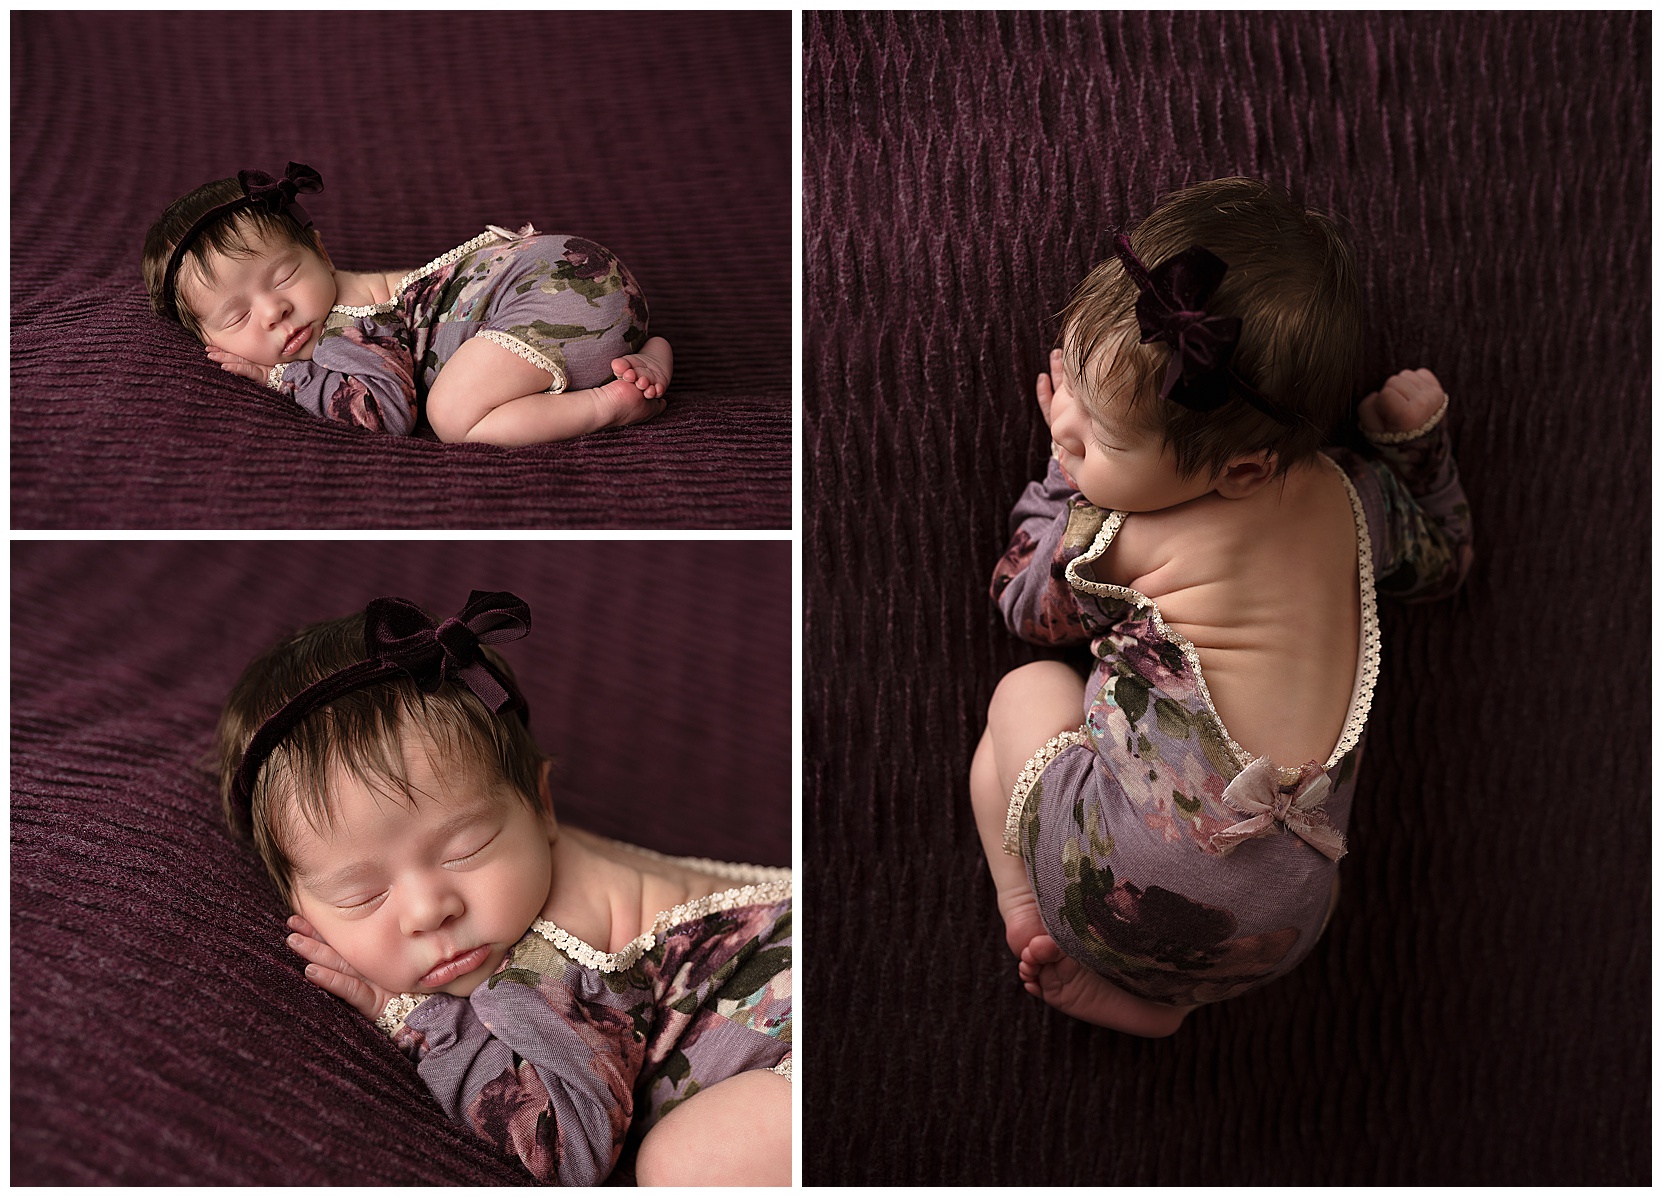 baby girl sleeping on a purple blanket wearing a purple floral romper